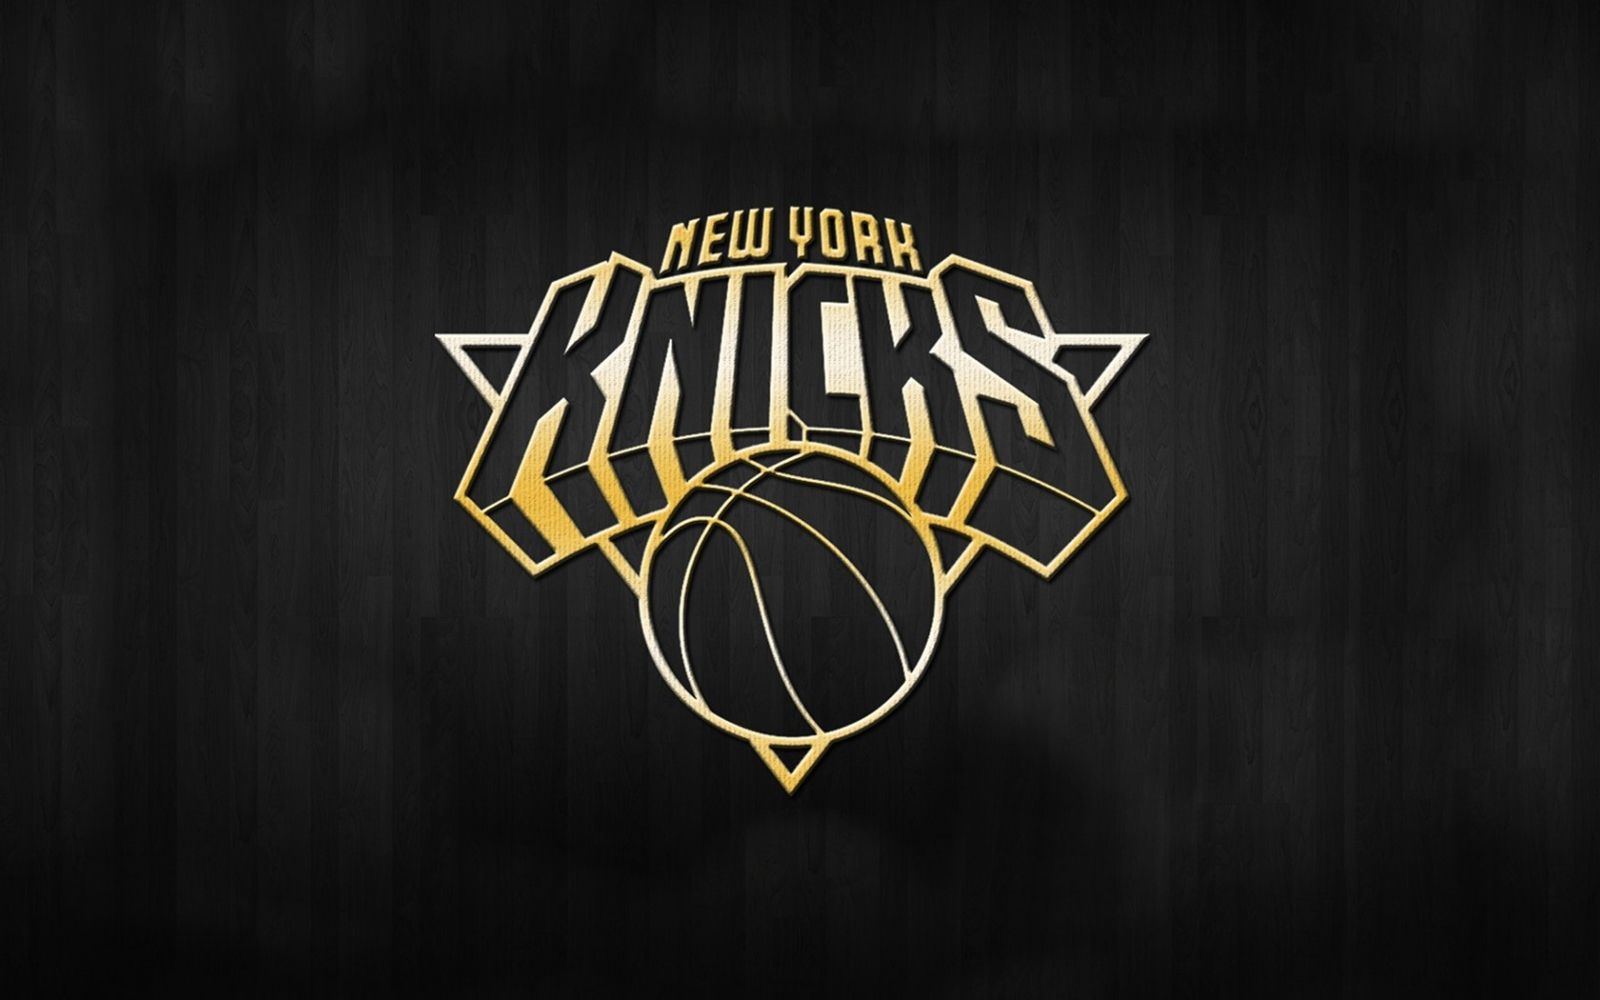 https://blogger.googleusercontent.com/img/b/R29vZ2xl/AVvXsEiv7N9ILyaivftMtvfpCHgESxfXcoS2YDpxekMXbaEcpbyeFa8sO4gxd2h0QjfSlqR6Uci3t5cAGGEaOzzL5p5ziEDlR5Uh6m653ydcJogkIJko6R6Lc4GiHVkPqUe4o9rMjXrRzxE3Siw/s1600/New_York_Knicks_2013_Logo_NBA_USA_Hd_Desktop_Wallpaper_citiesandteams.blogspot.com.jpg